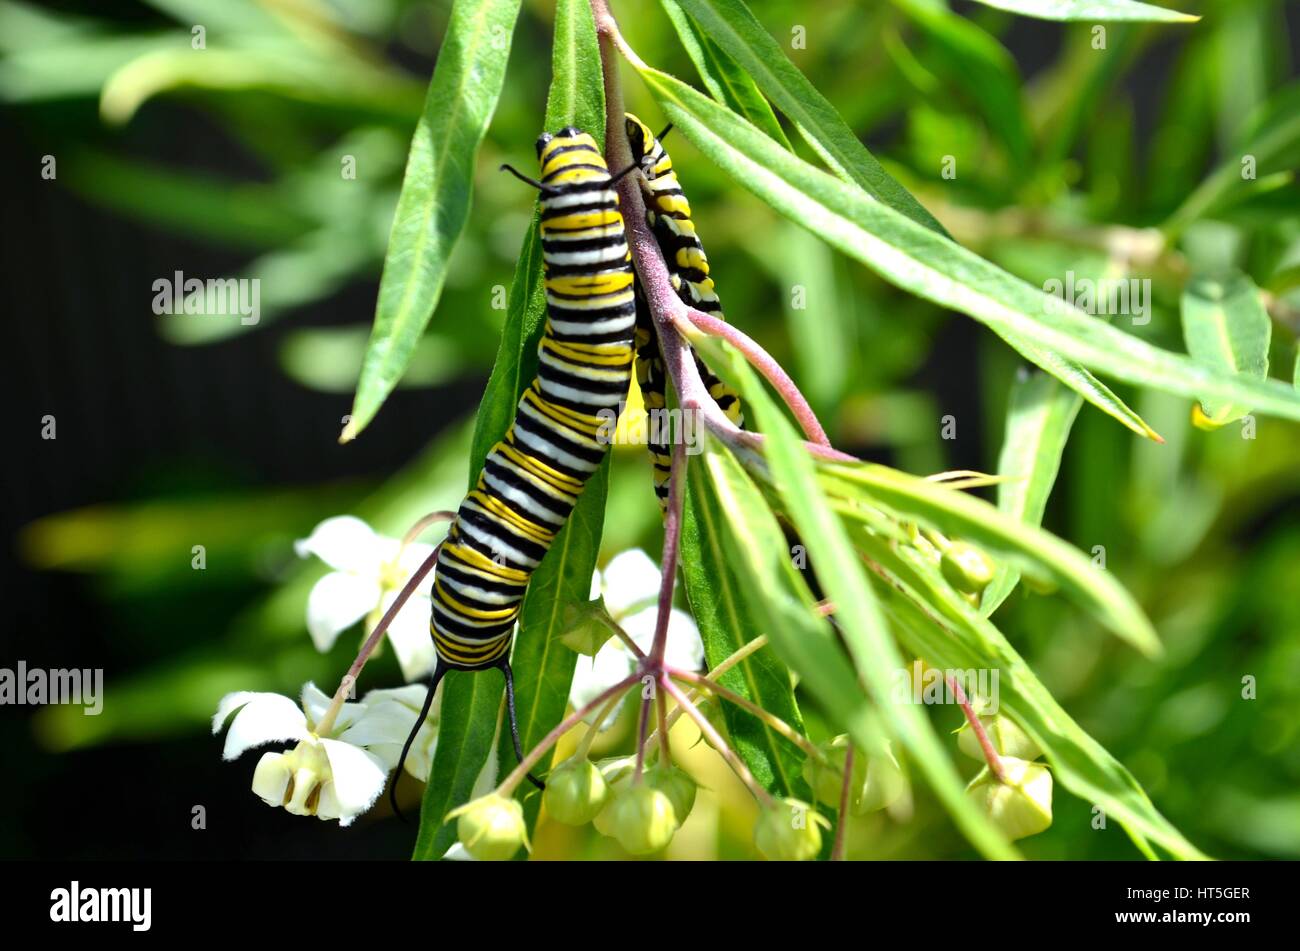 Monarch caterpillar on Milkweed plant Stock Photo